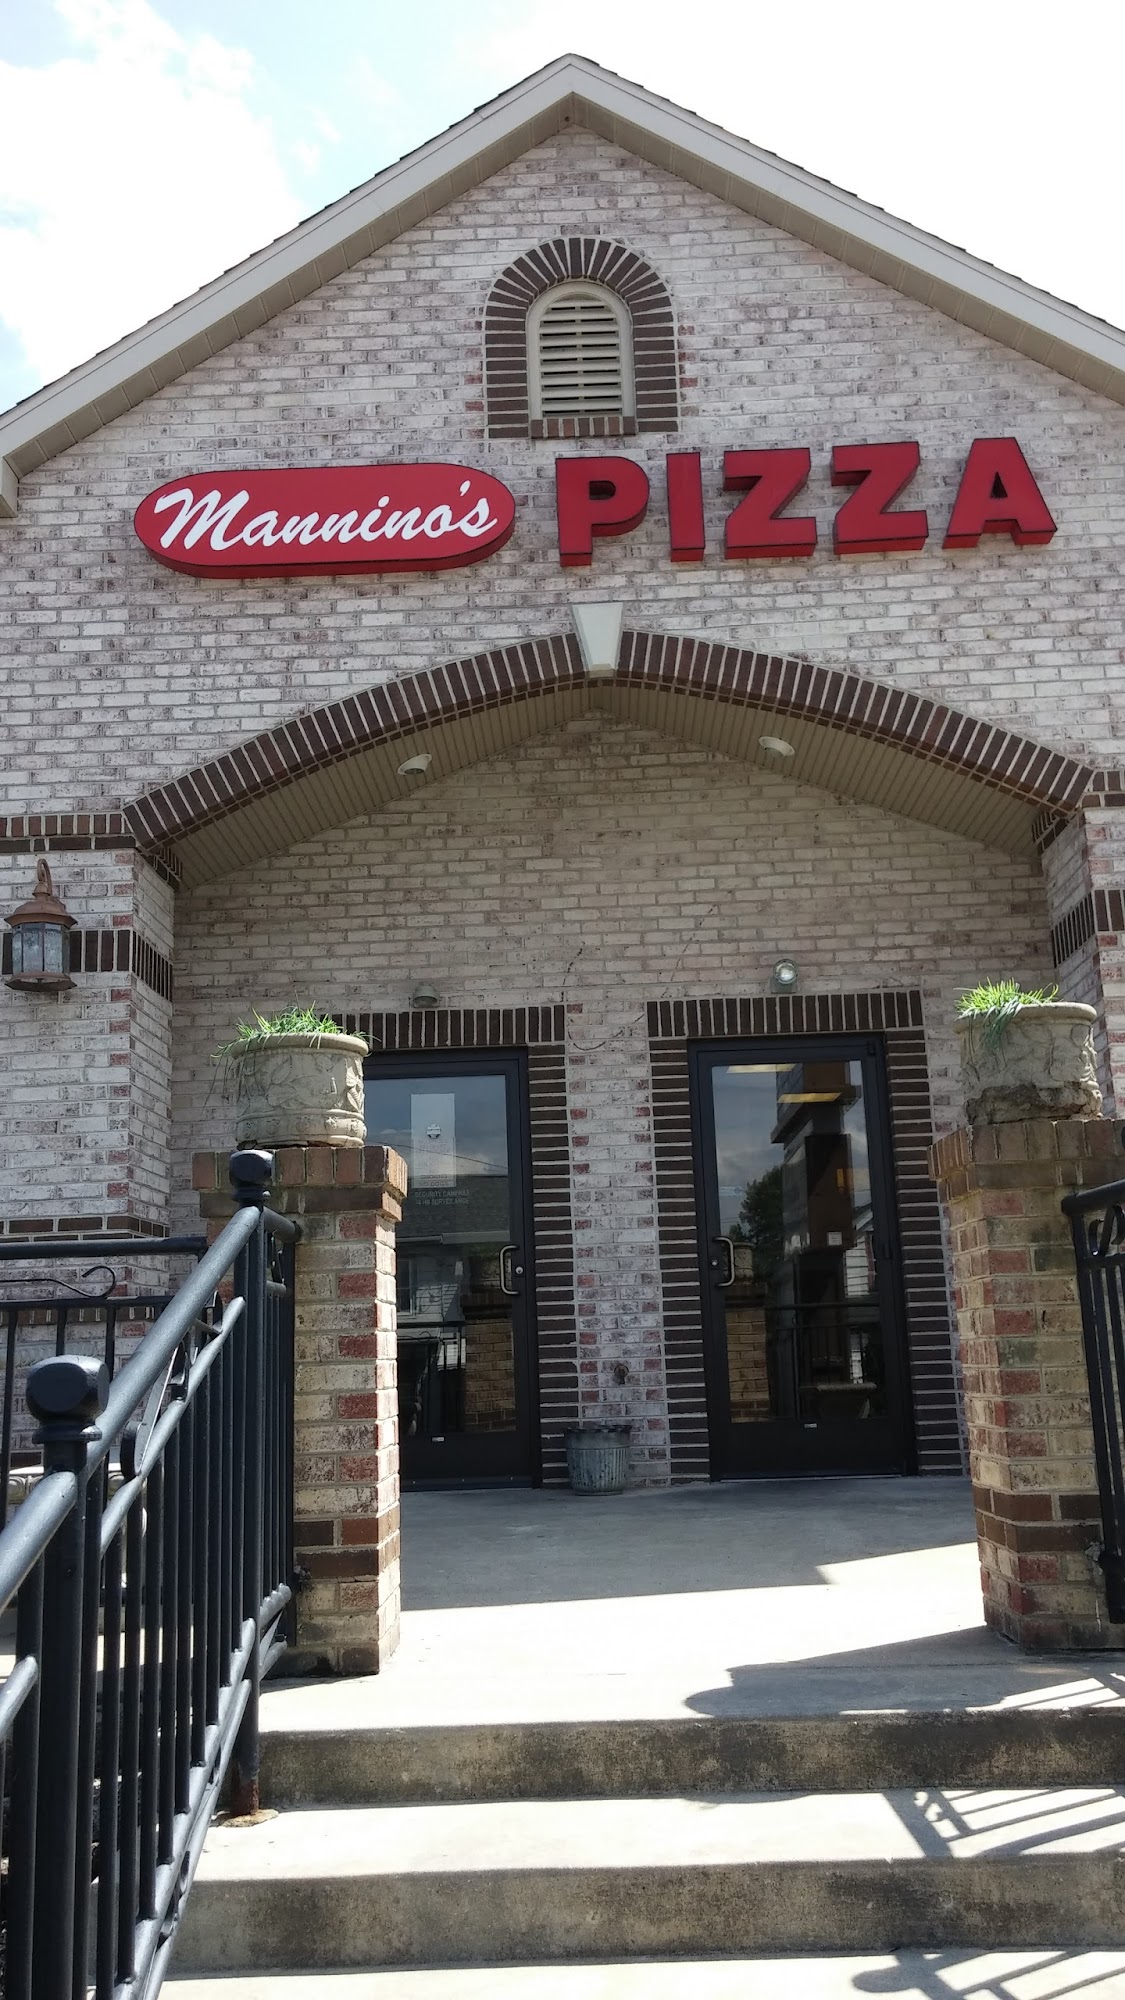 Mannino's Pizzeria & Restaurant - Lebanon, PA